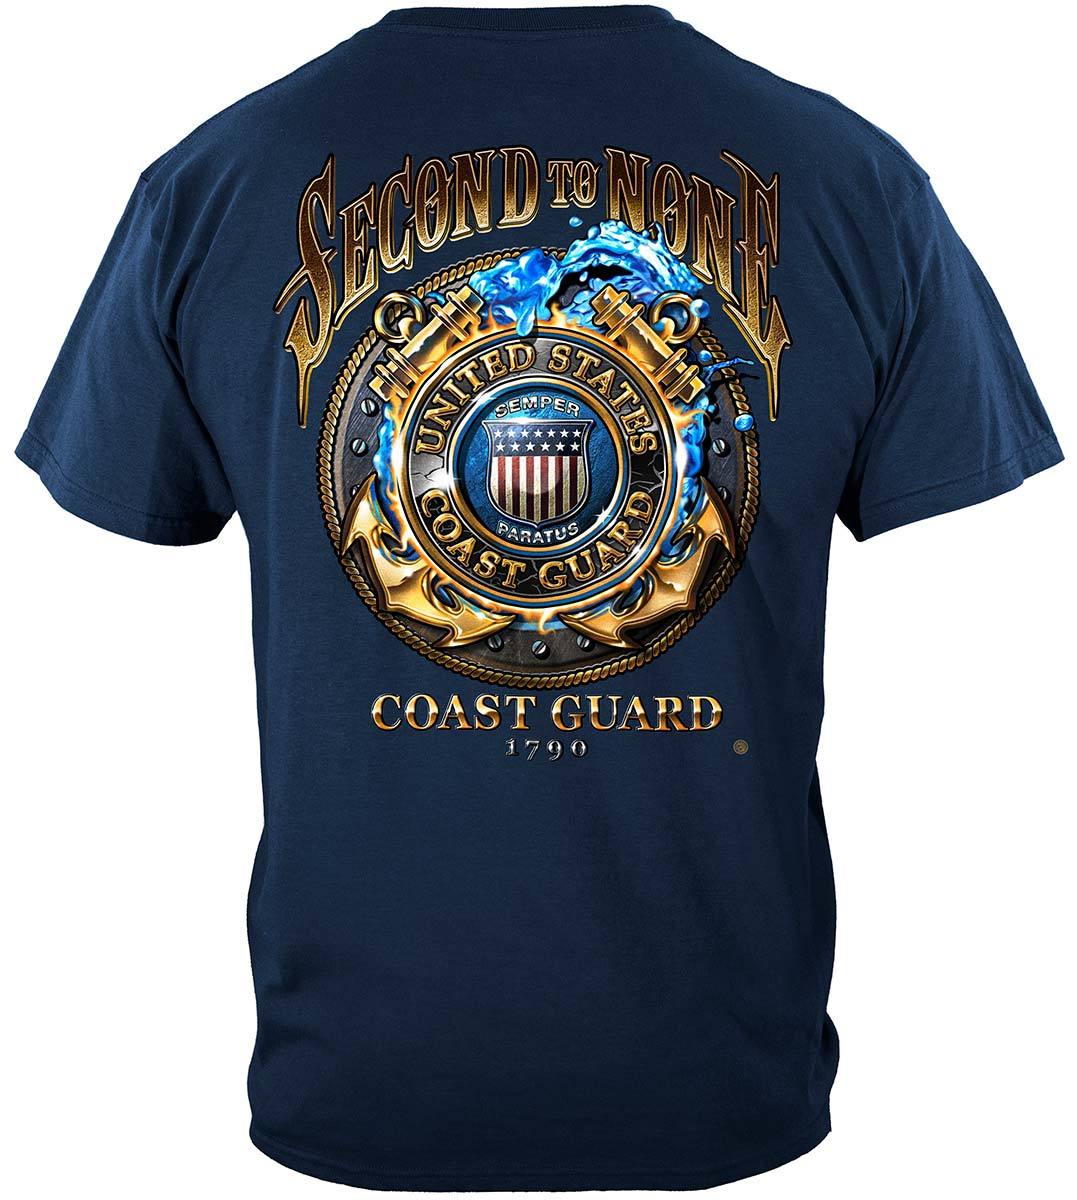 US Coast Guard Second To None Premium T-Shirt